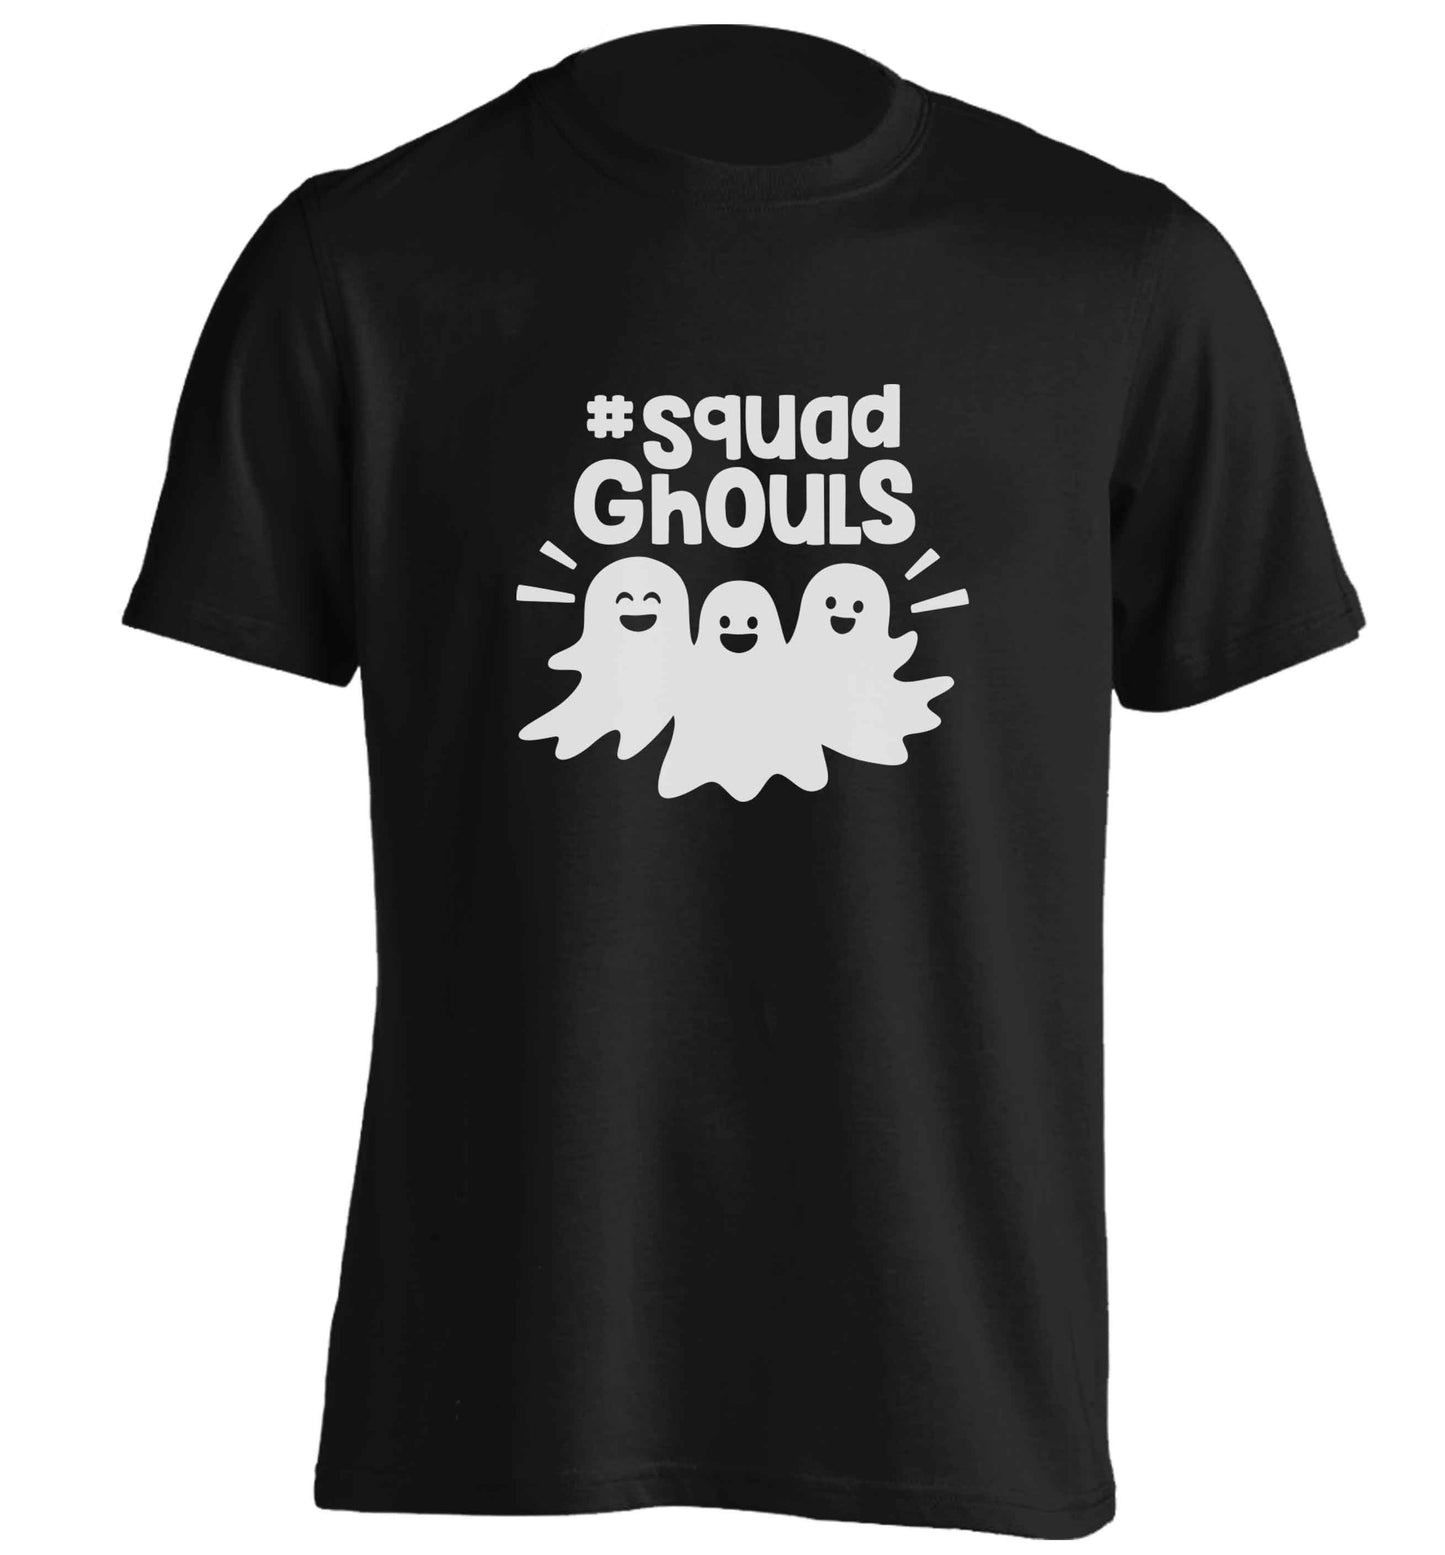 Squad ghouls Kit adults unisex black Tshirt 2XL